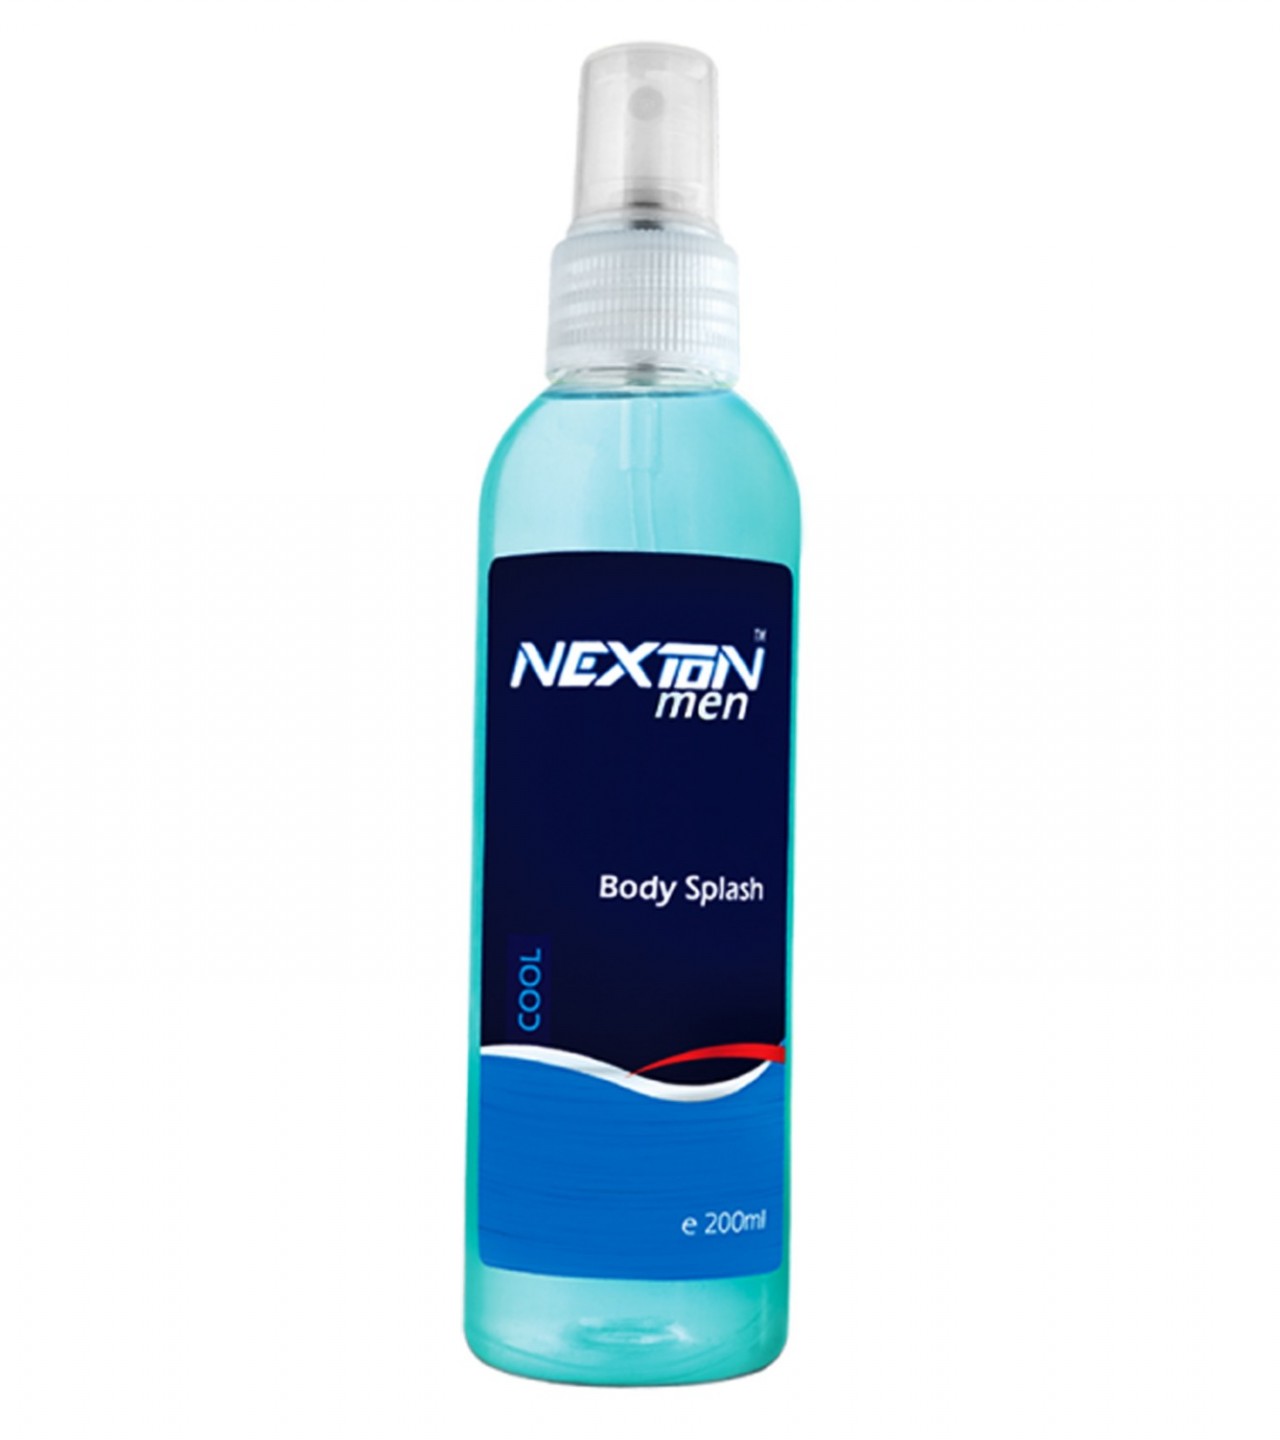 Nexton Body Splash Deodorant For Men (Cool) - 200 ml